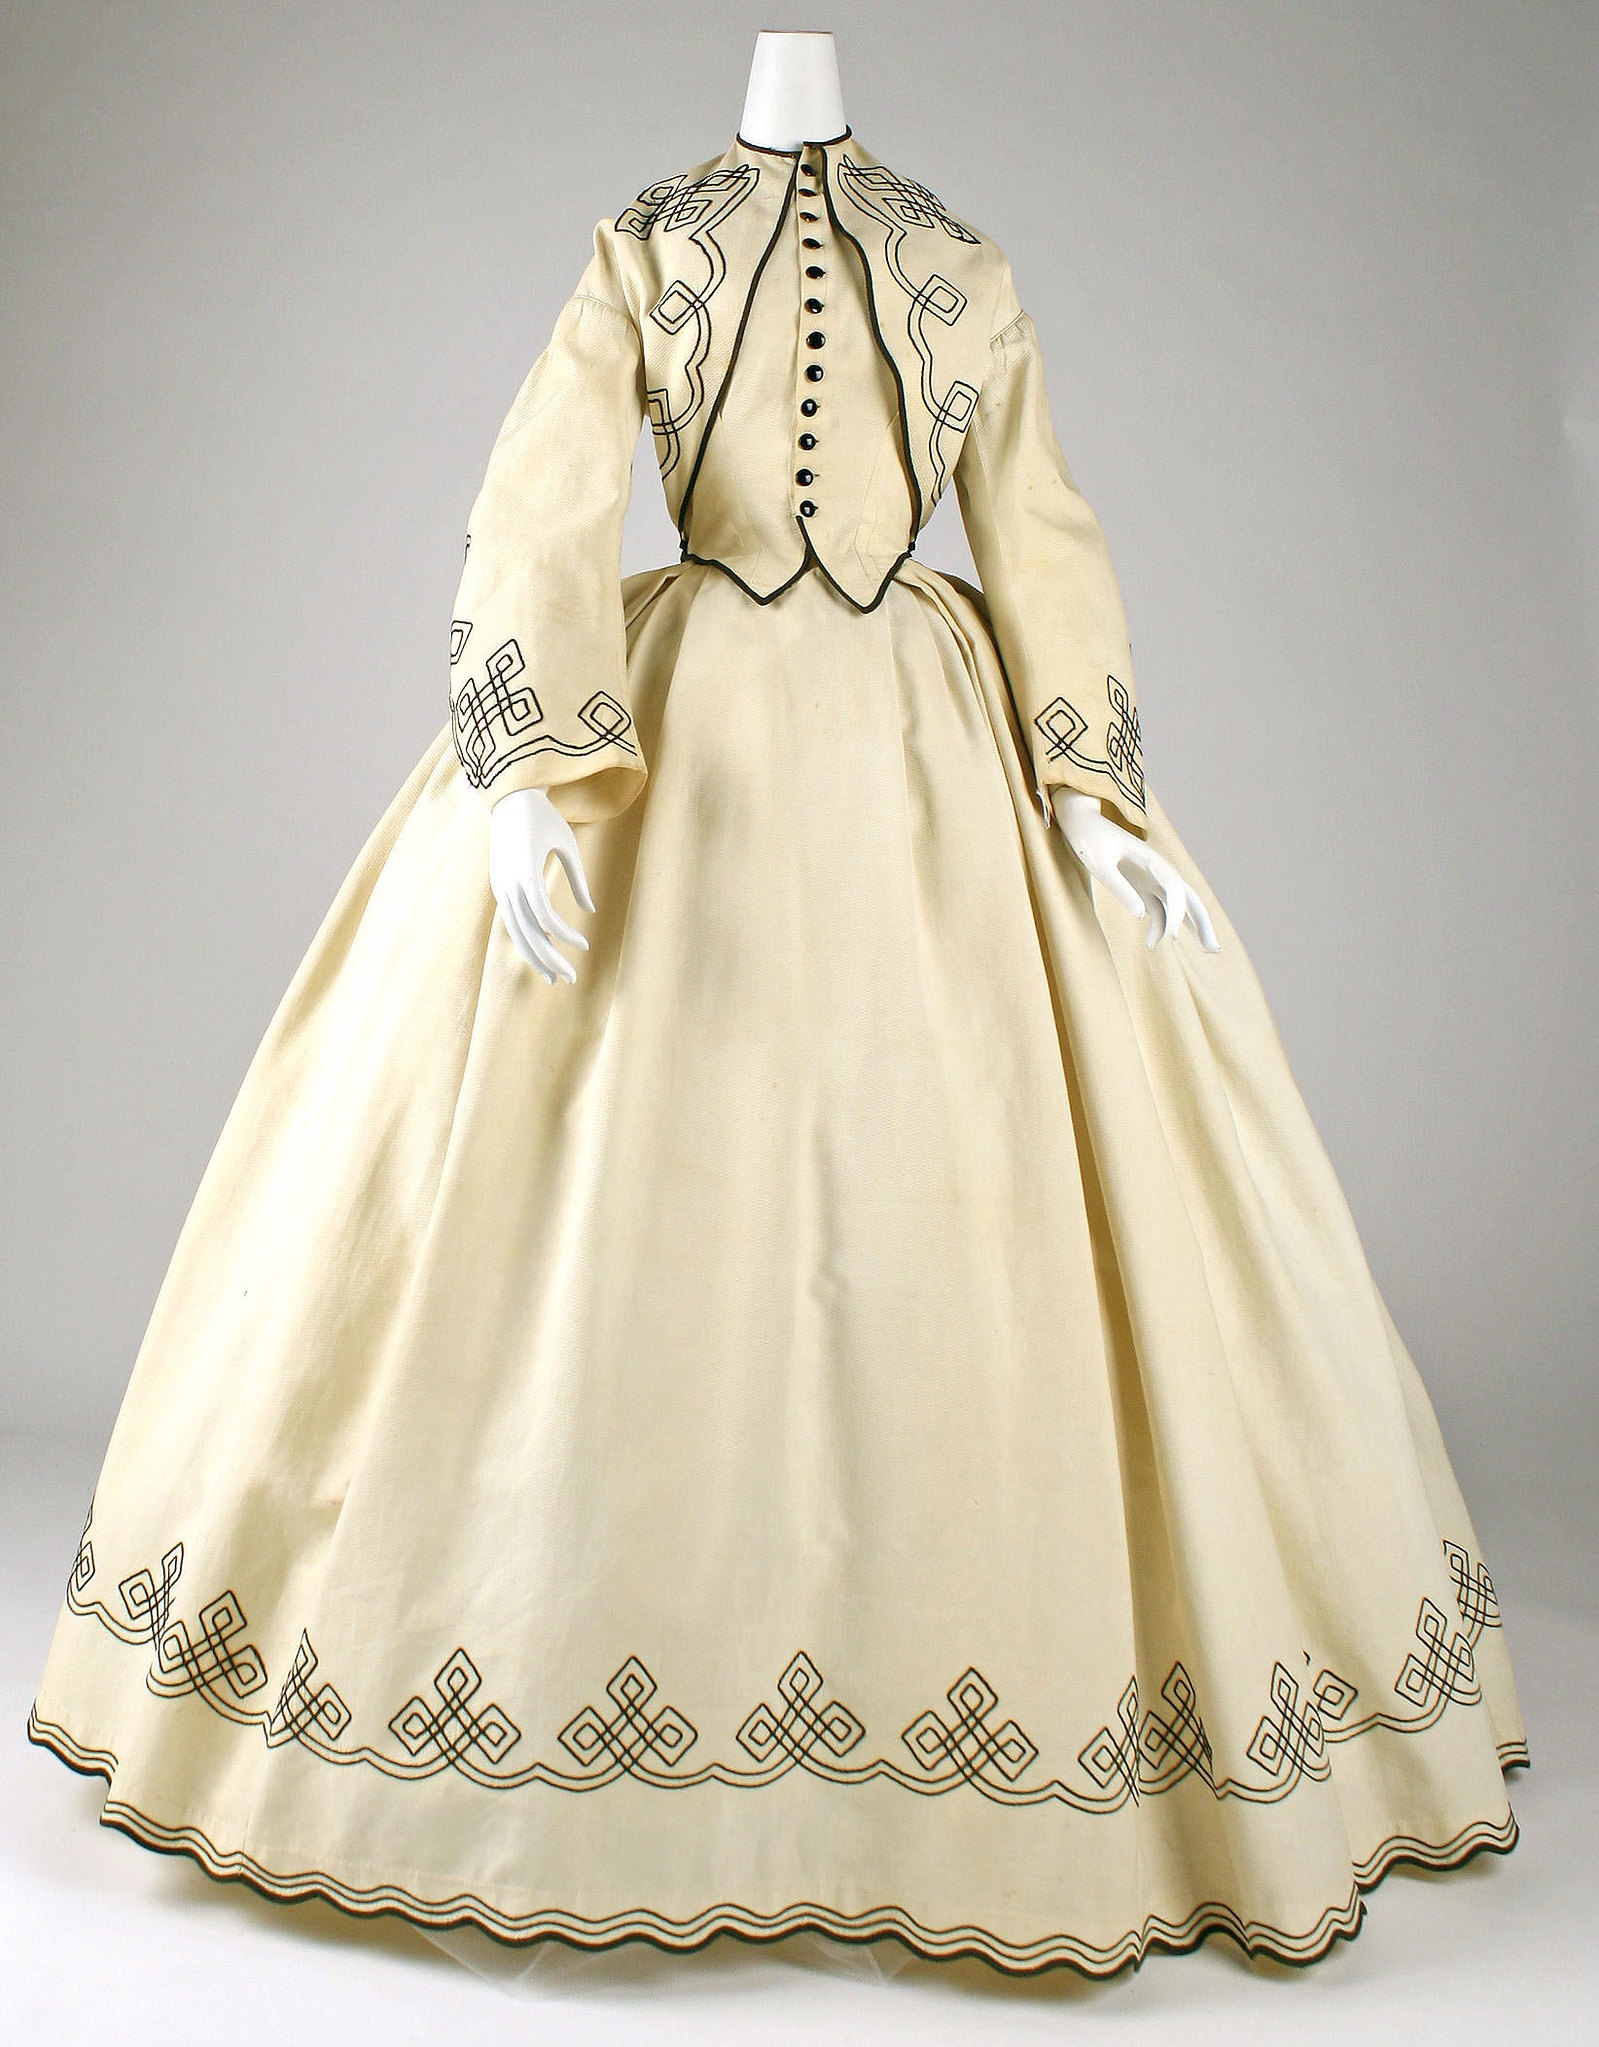 1860-64, American, cotton. metmuseum